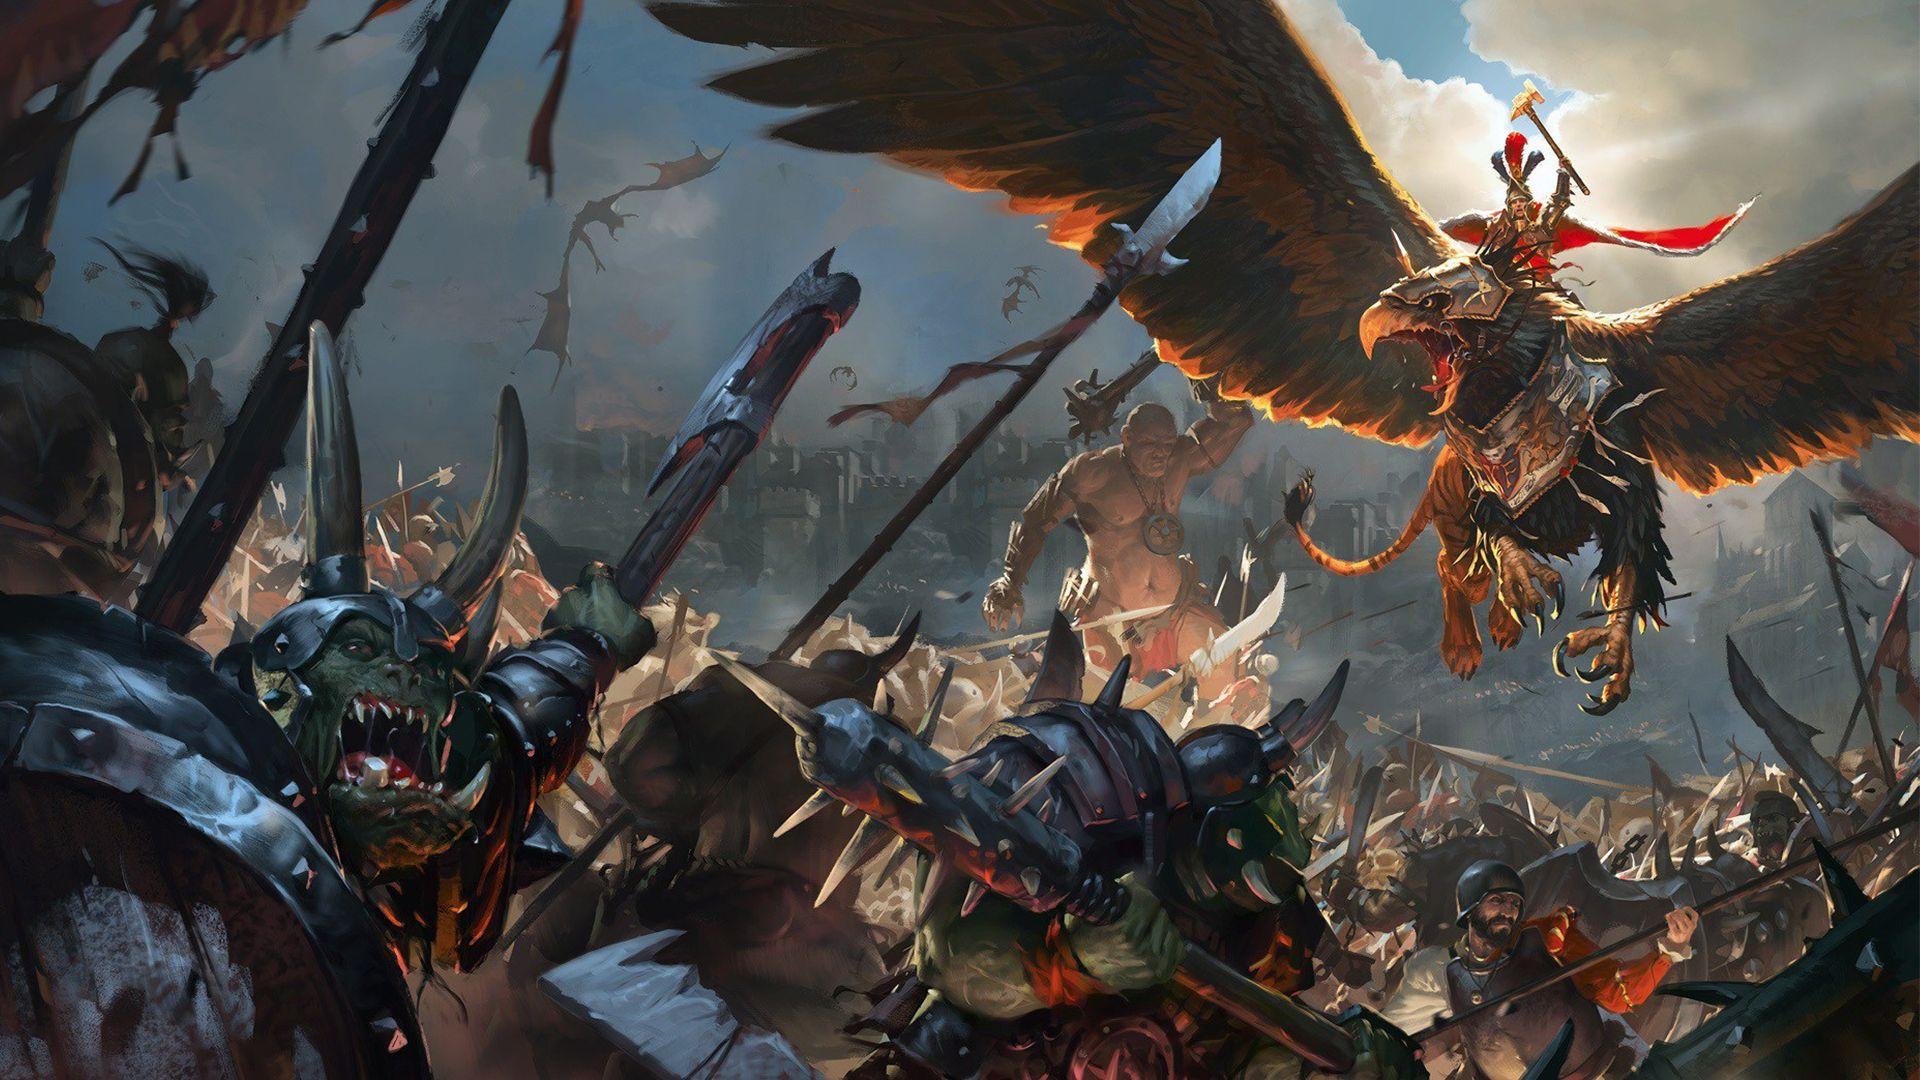 More Total War: Warhammer Wallpapers 1920x1080